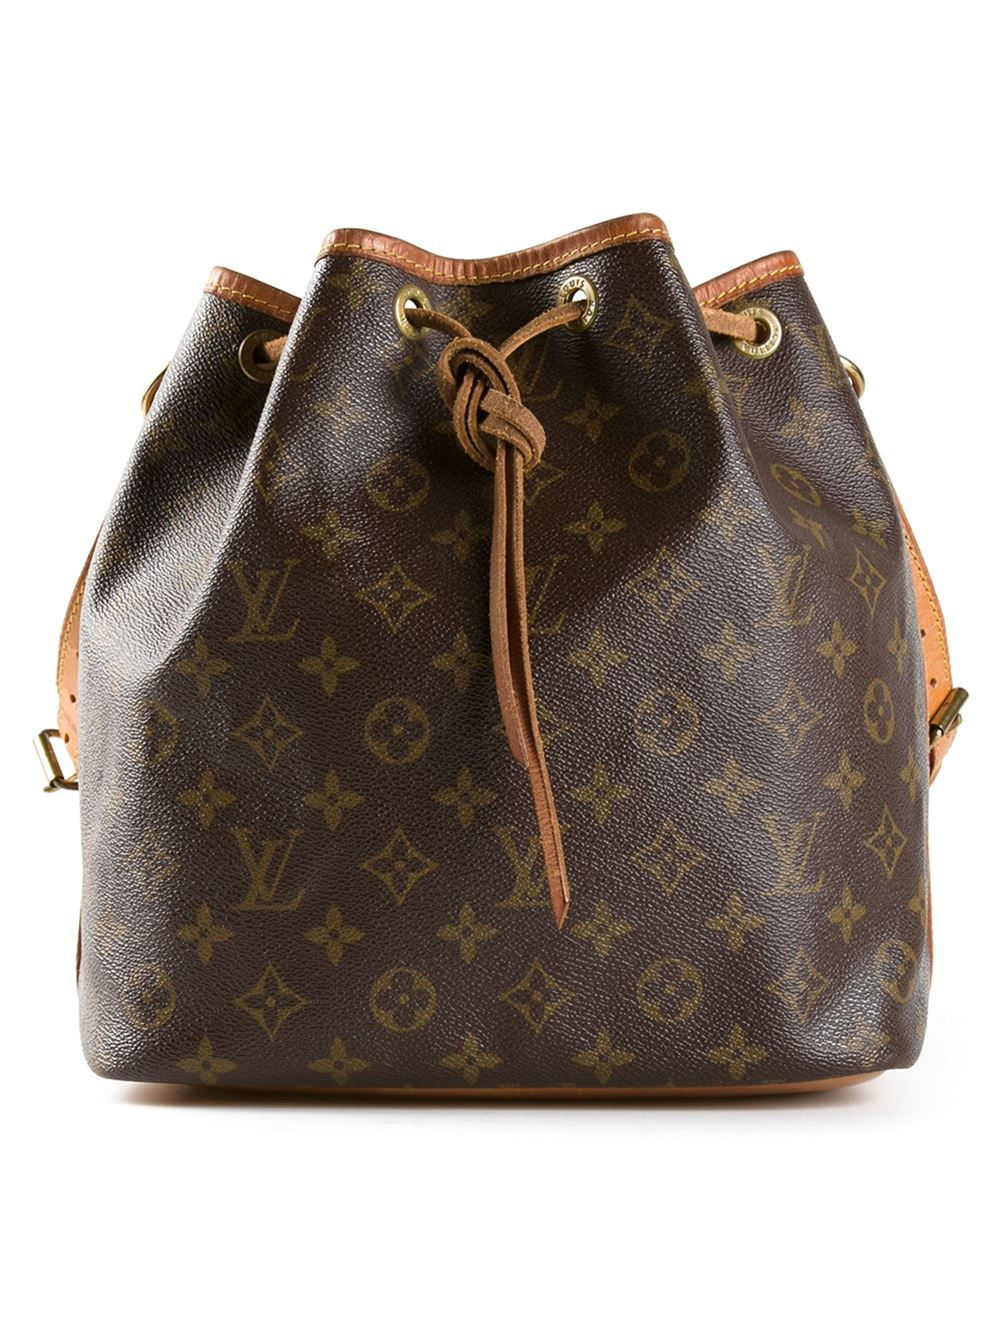 Lyst - Louis Vuitton Monogram Petite Bucket Bag in Brown